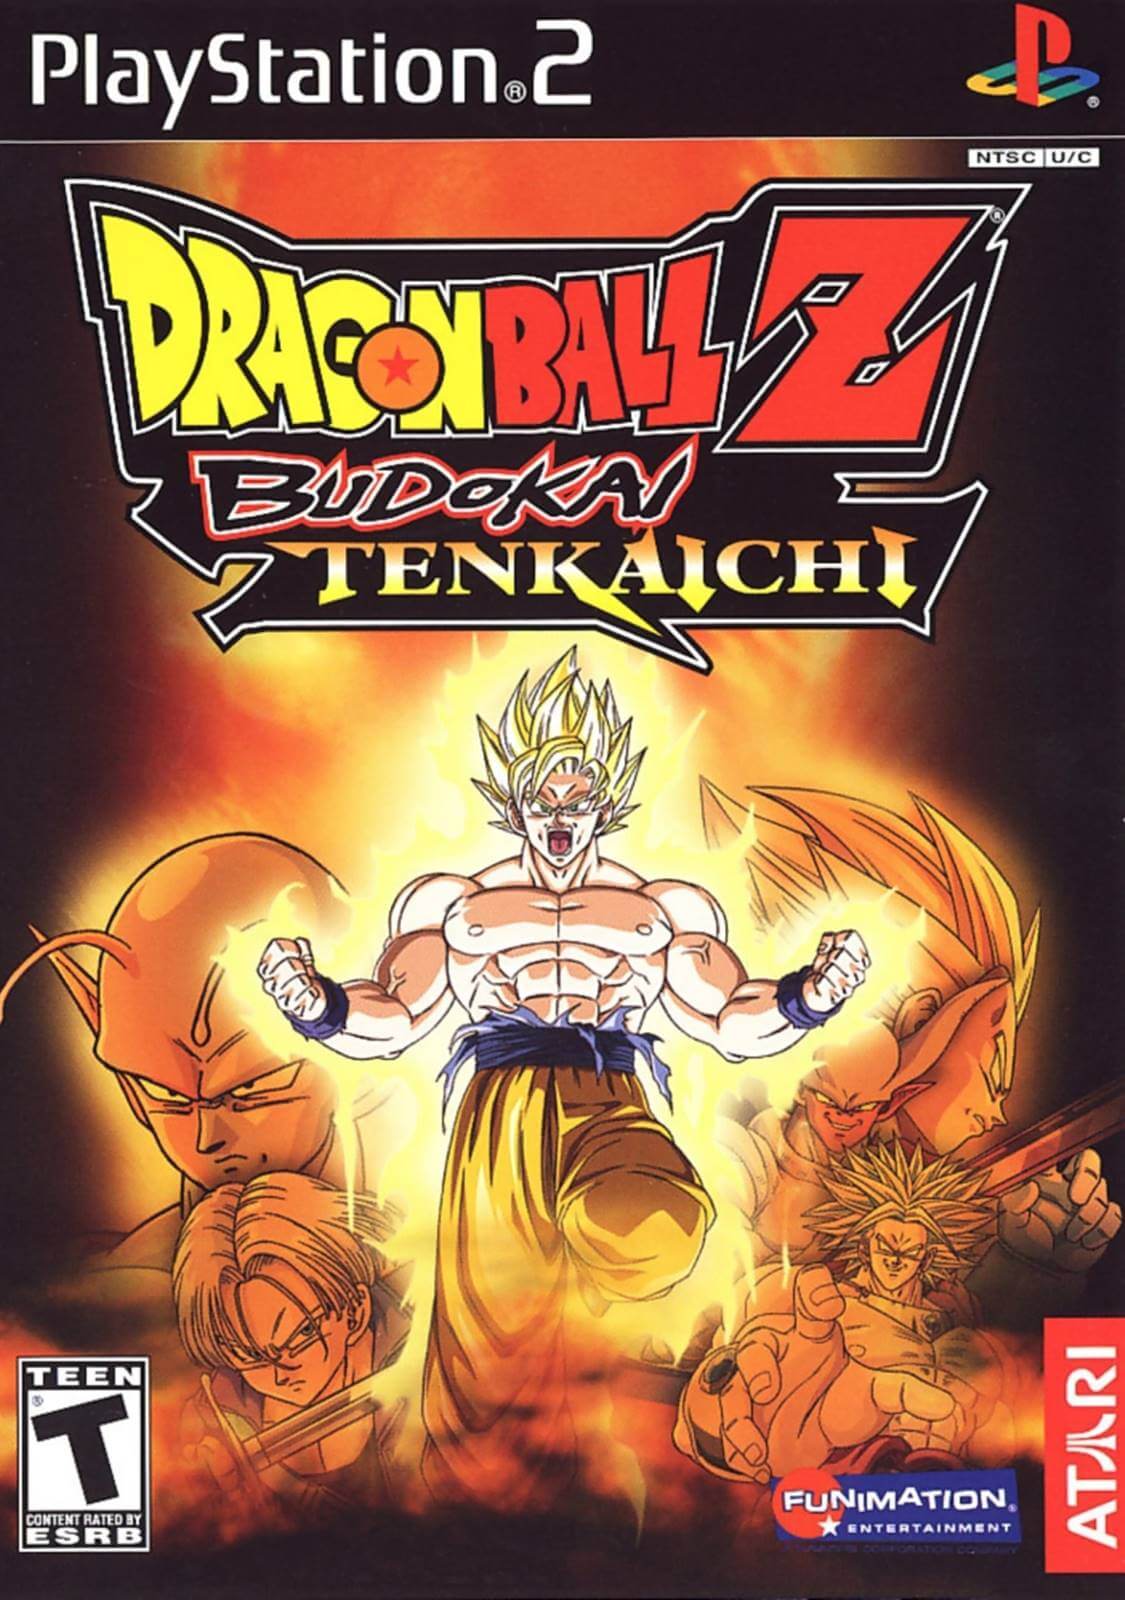 Dragonball Z Budokai Tenkaichi 2 Ps2 Rom Iso Playstation 2 Game